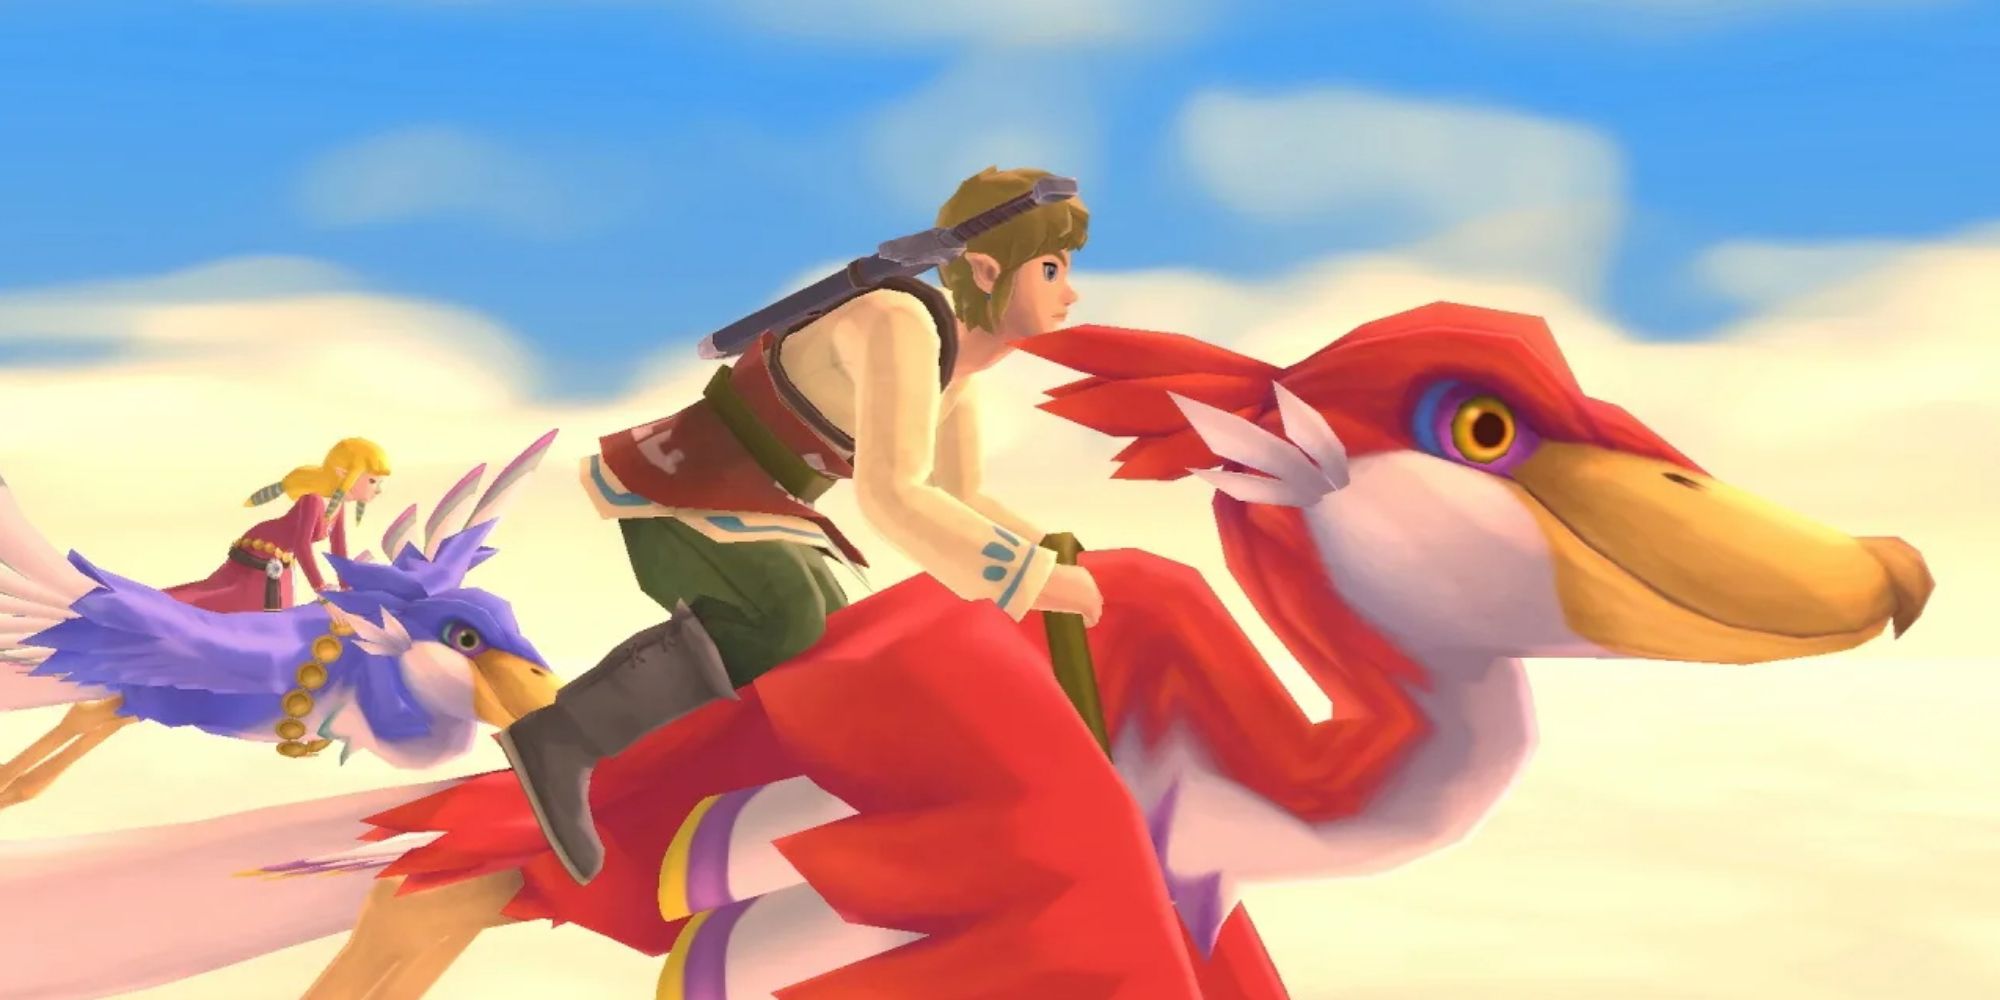 Link and Zelda riding Loftwings in Skyward Sword